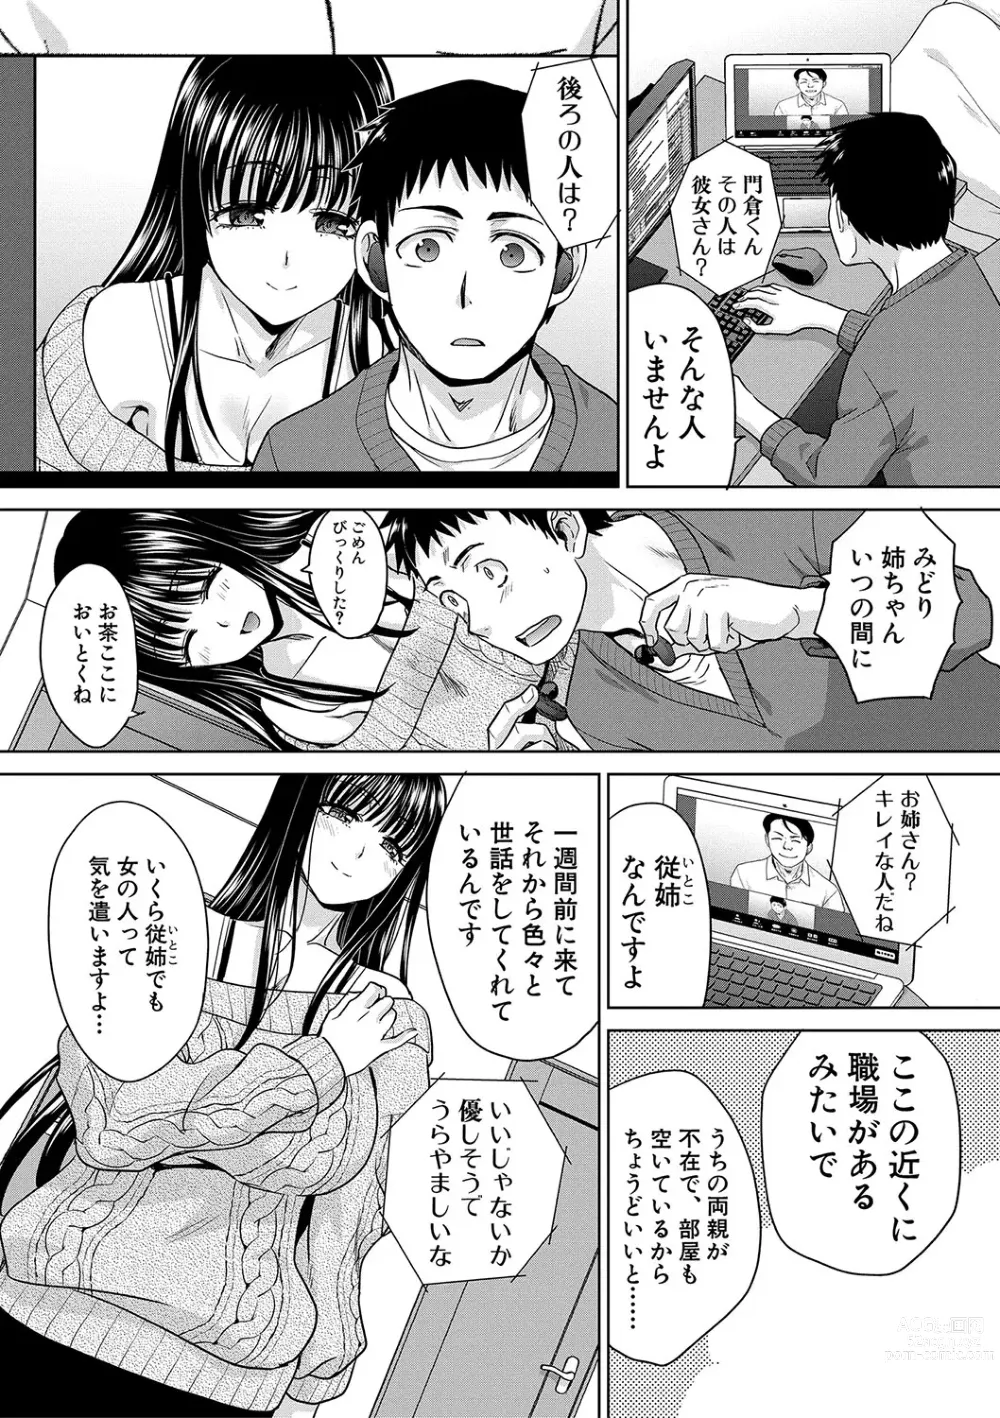 Page 5 of manga Shinseki Midara My Home Harem